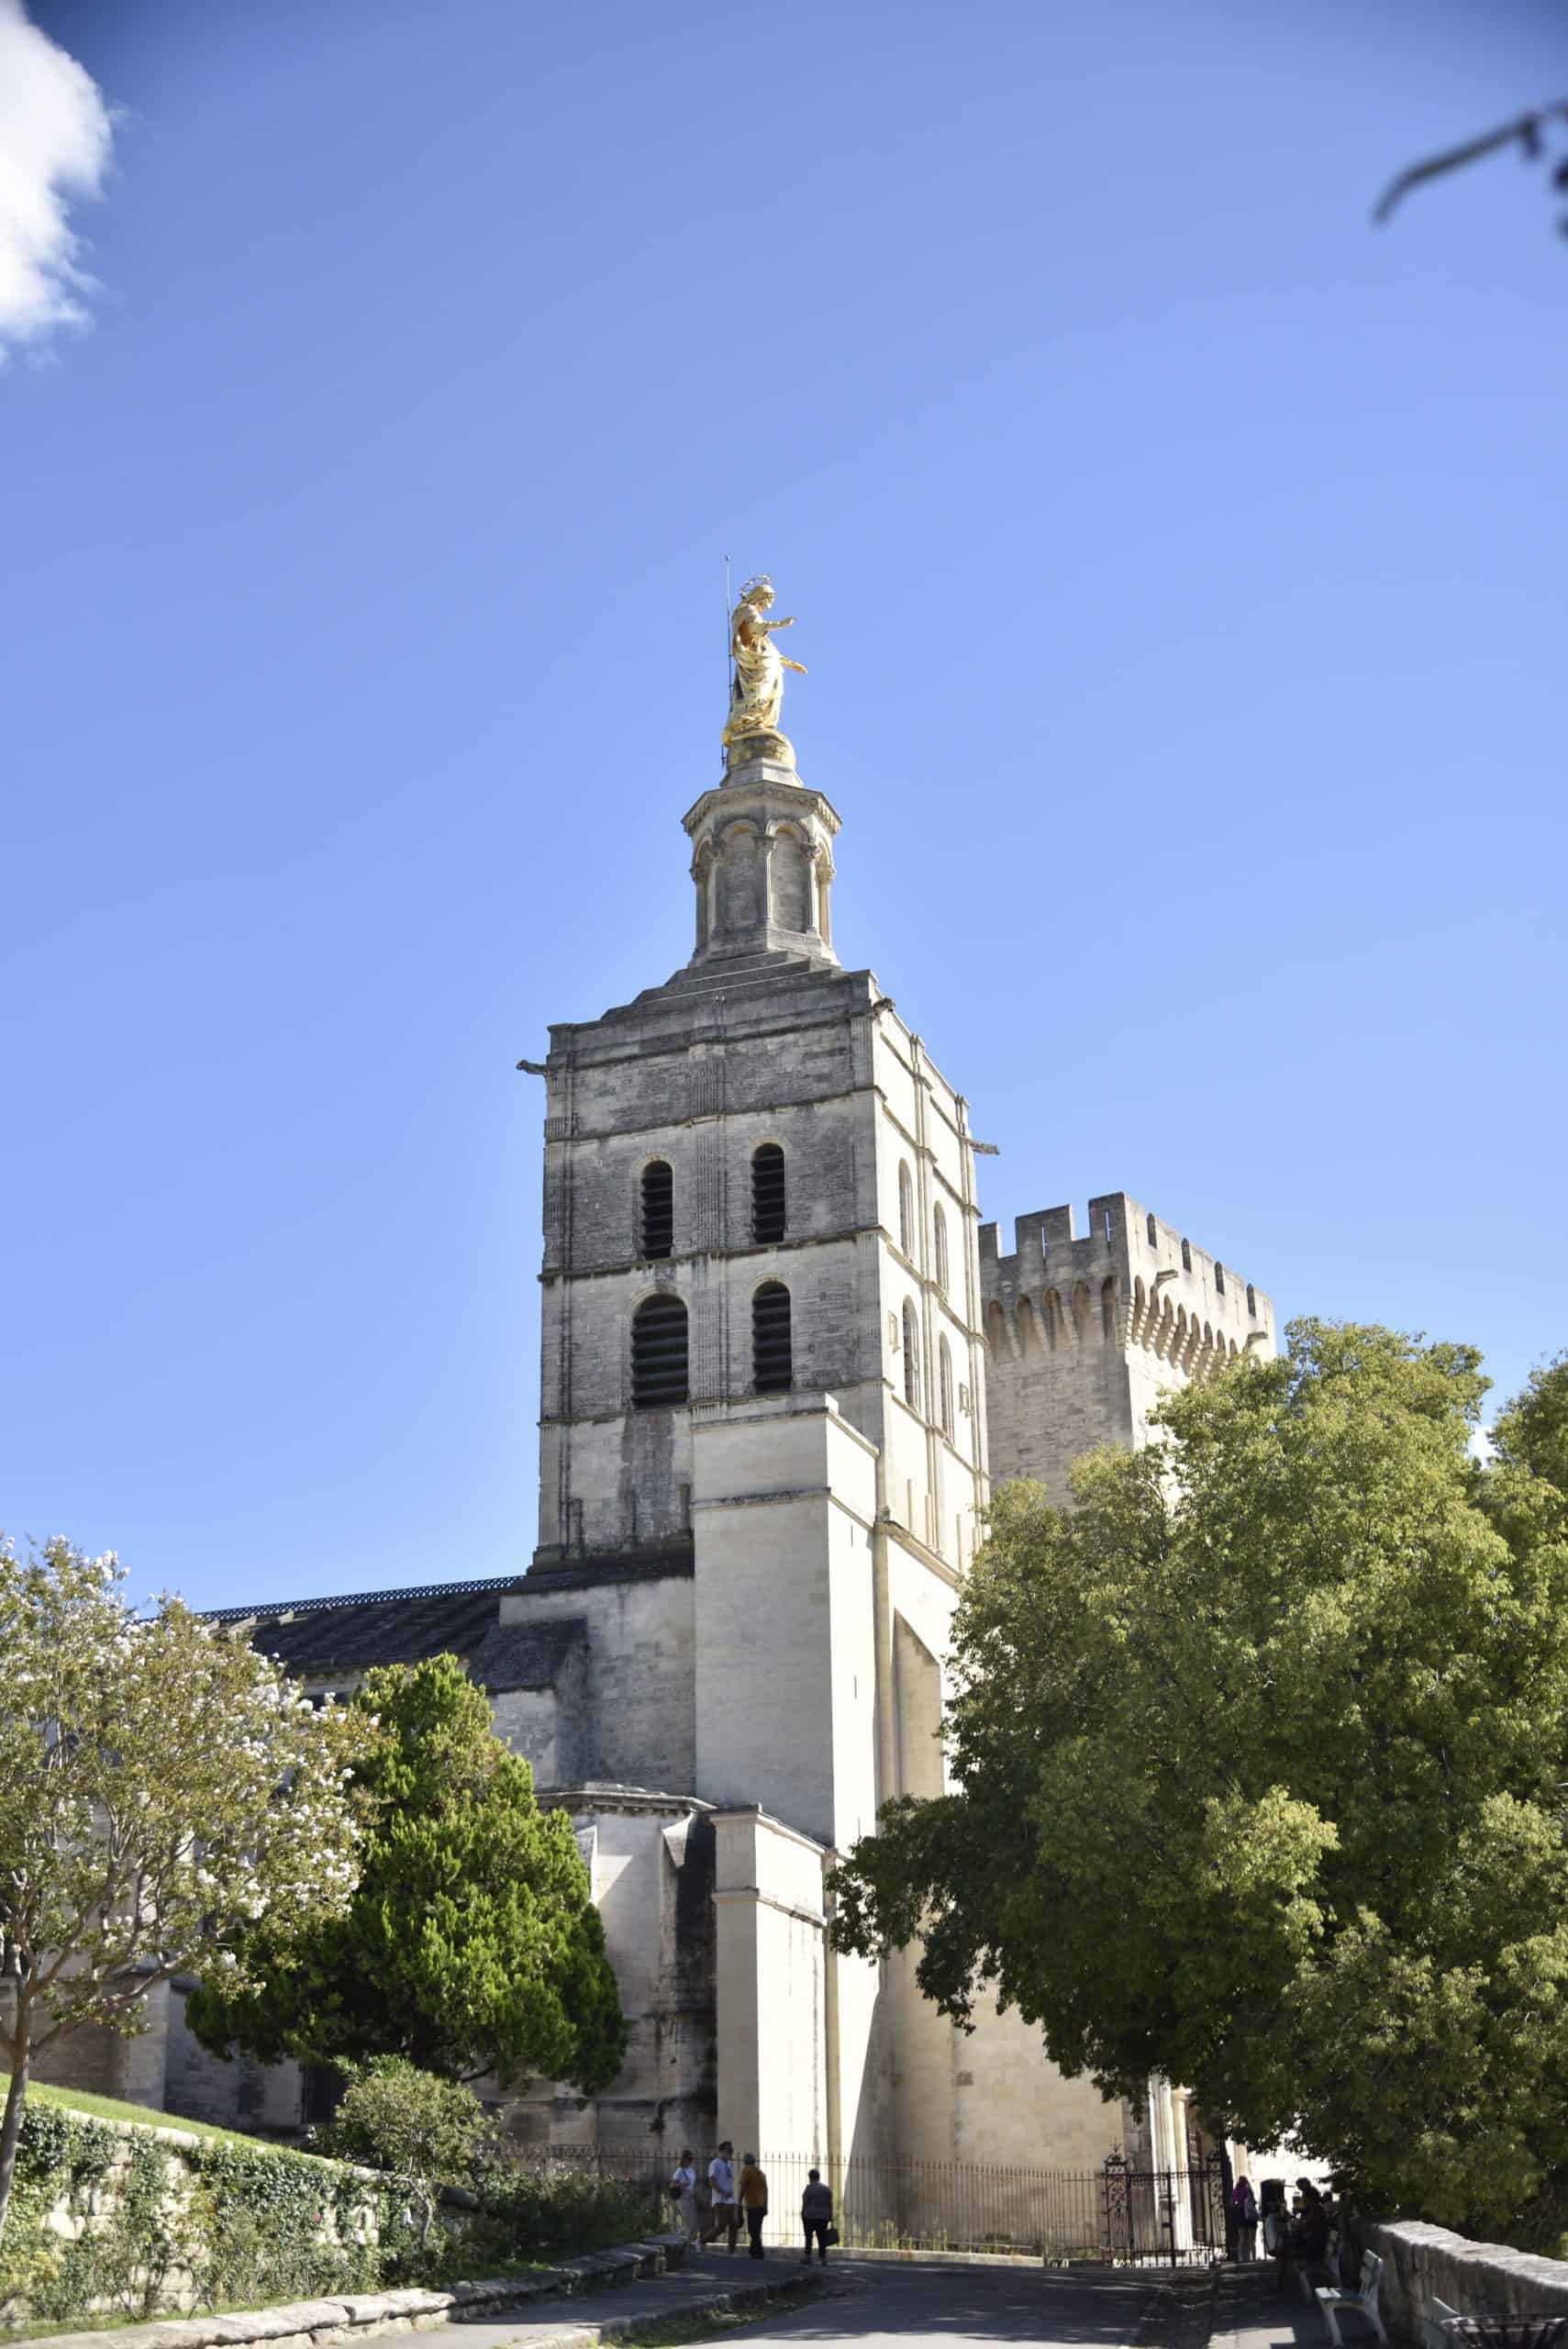 Things to do in Avignon, Avignon Tourist Spots